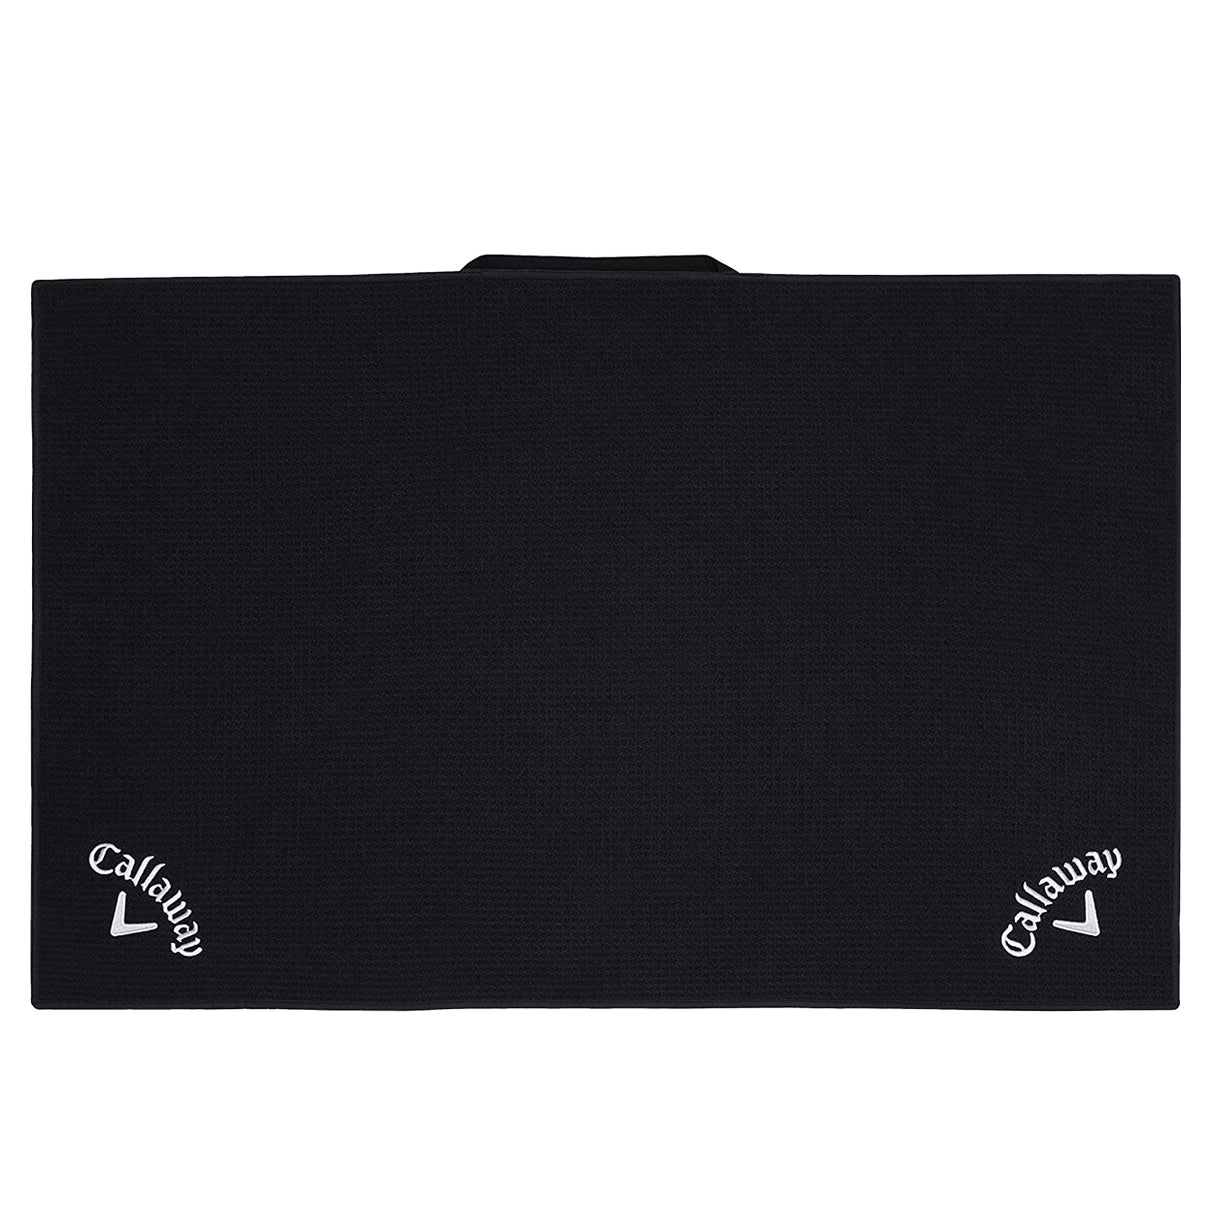 Callaway 30 x 20 inch Players Microfiber Golf Bag Towel